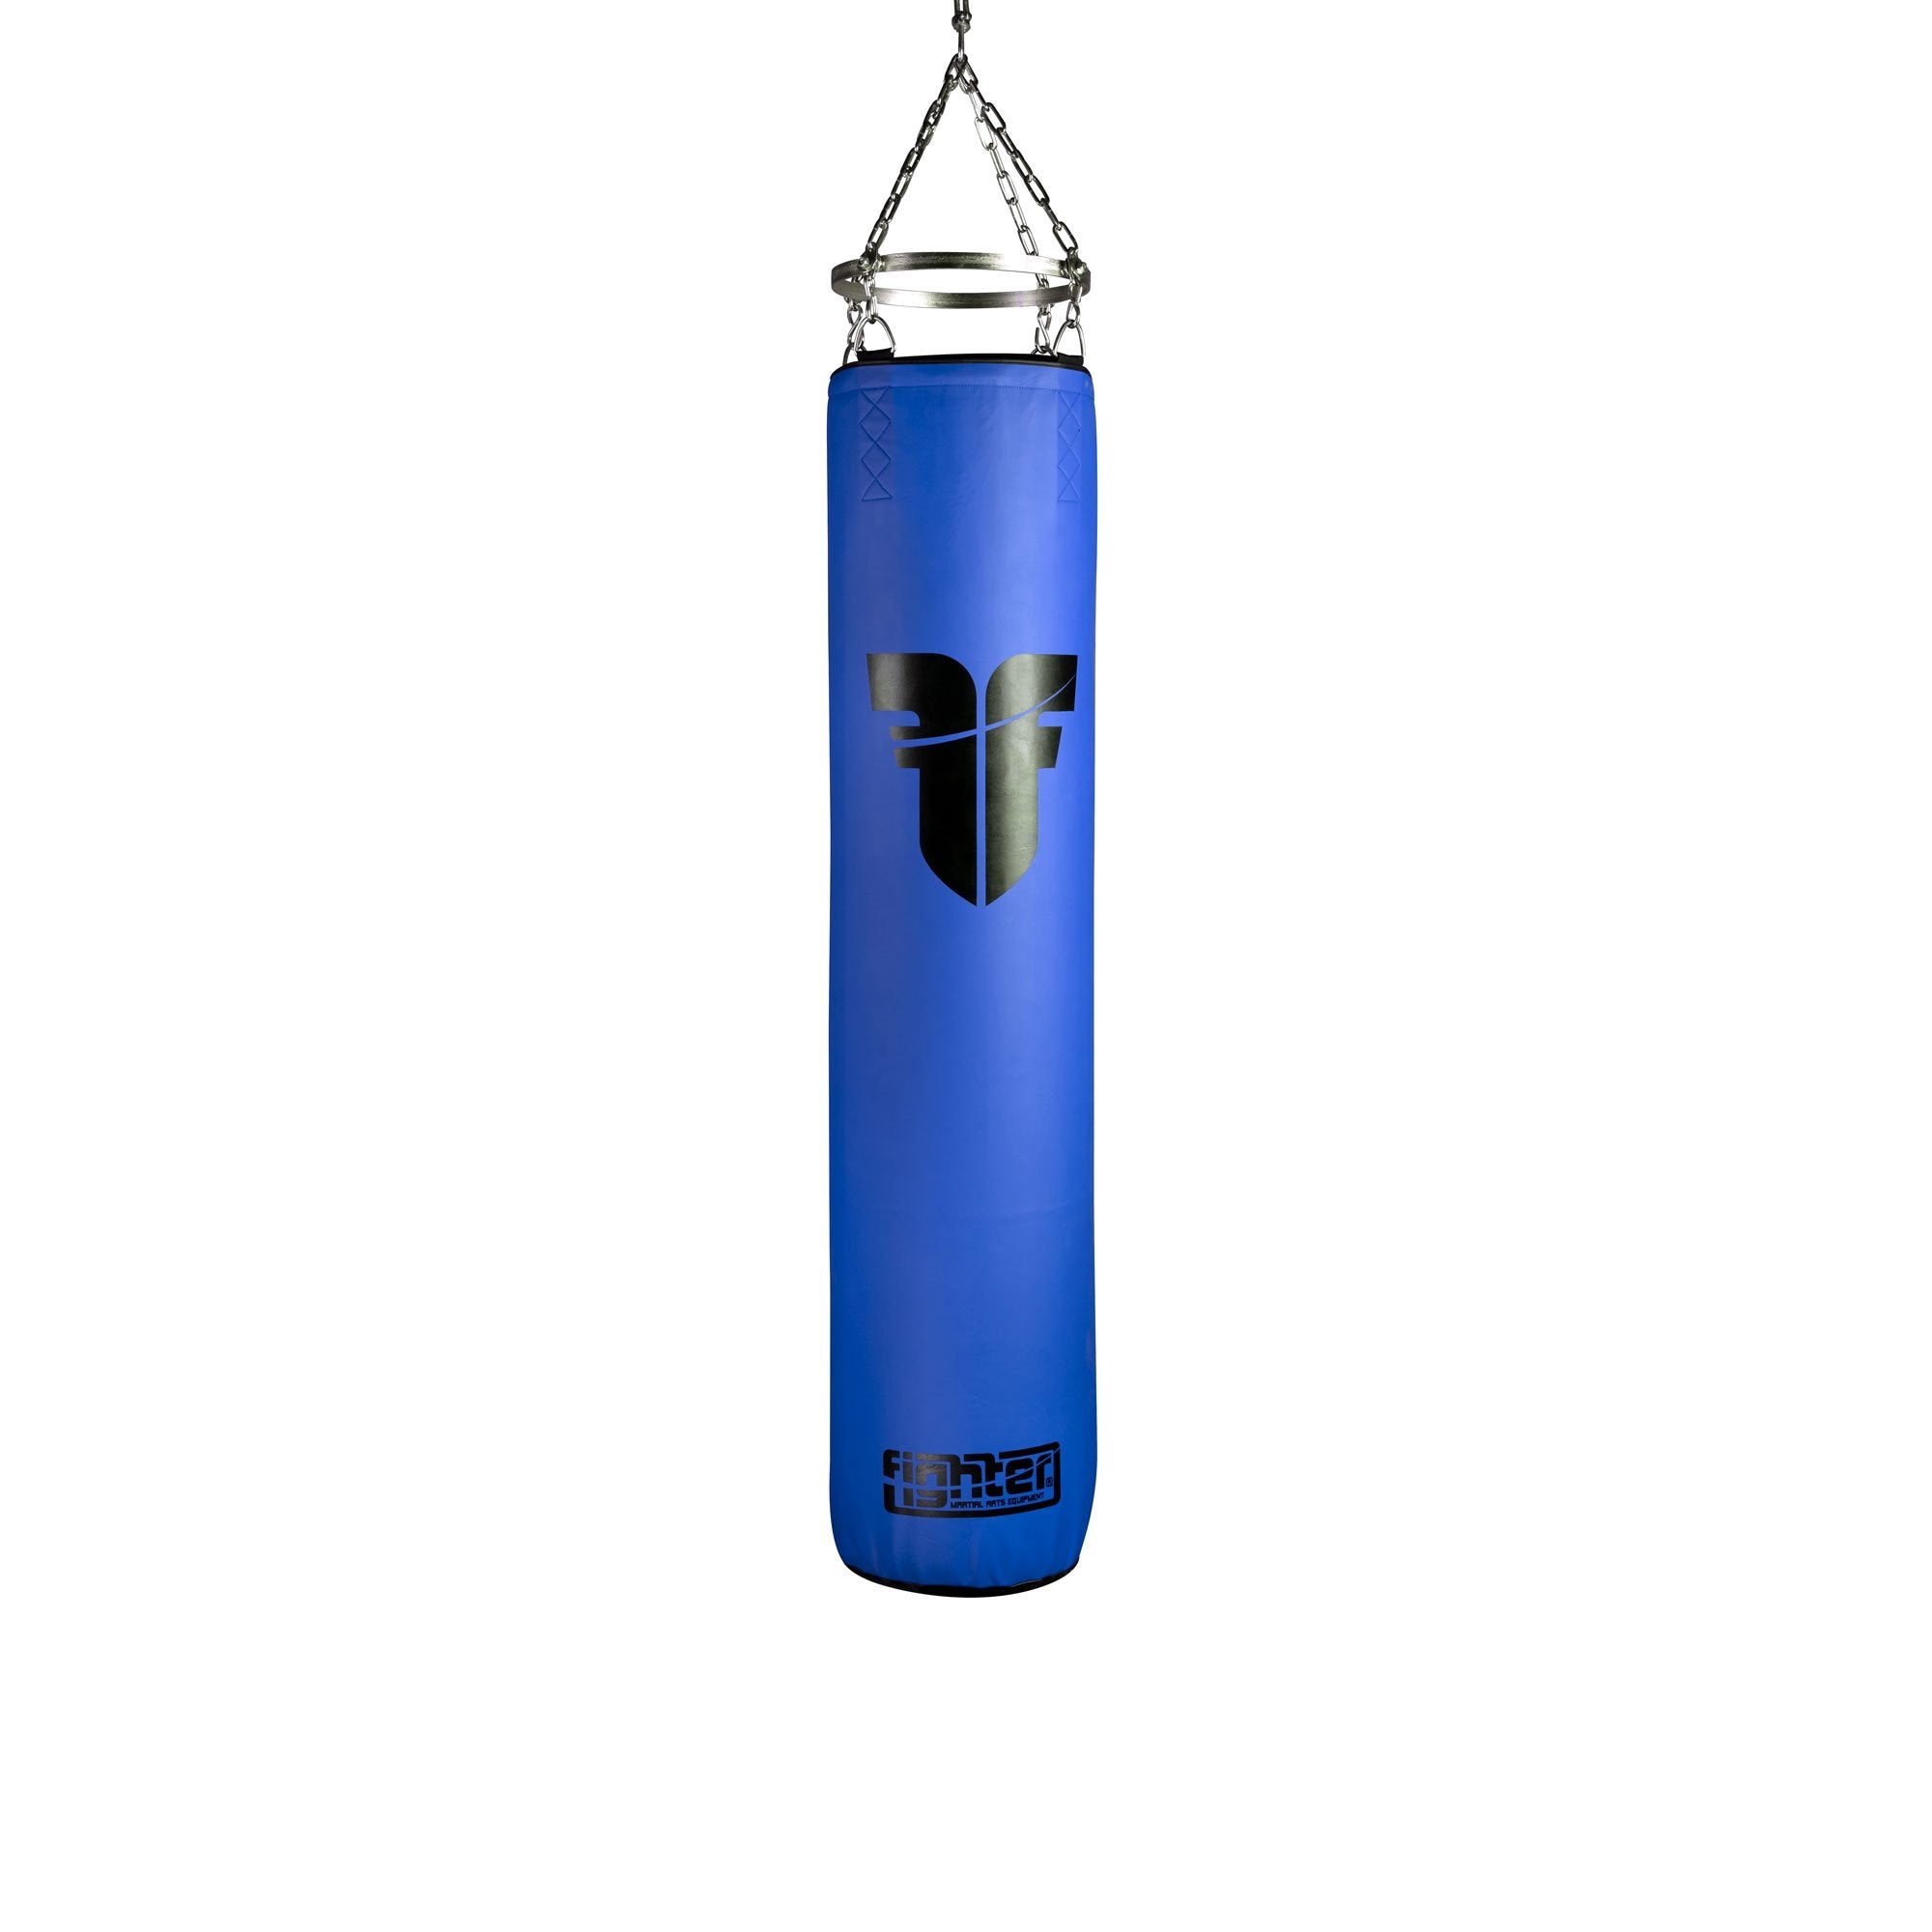 Fitness Boxing bag Fighter 150cm - blue